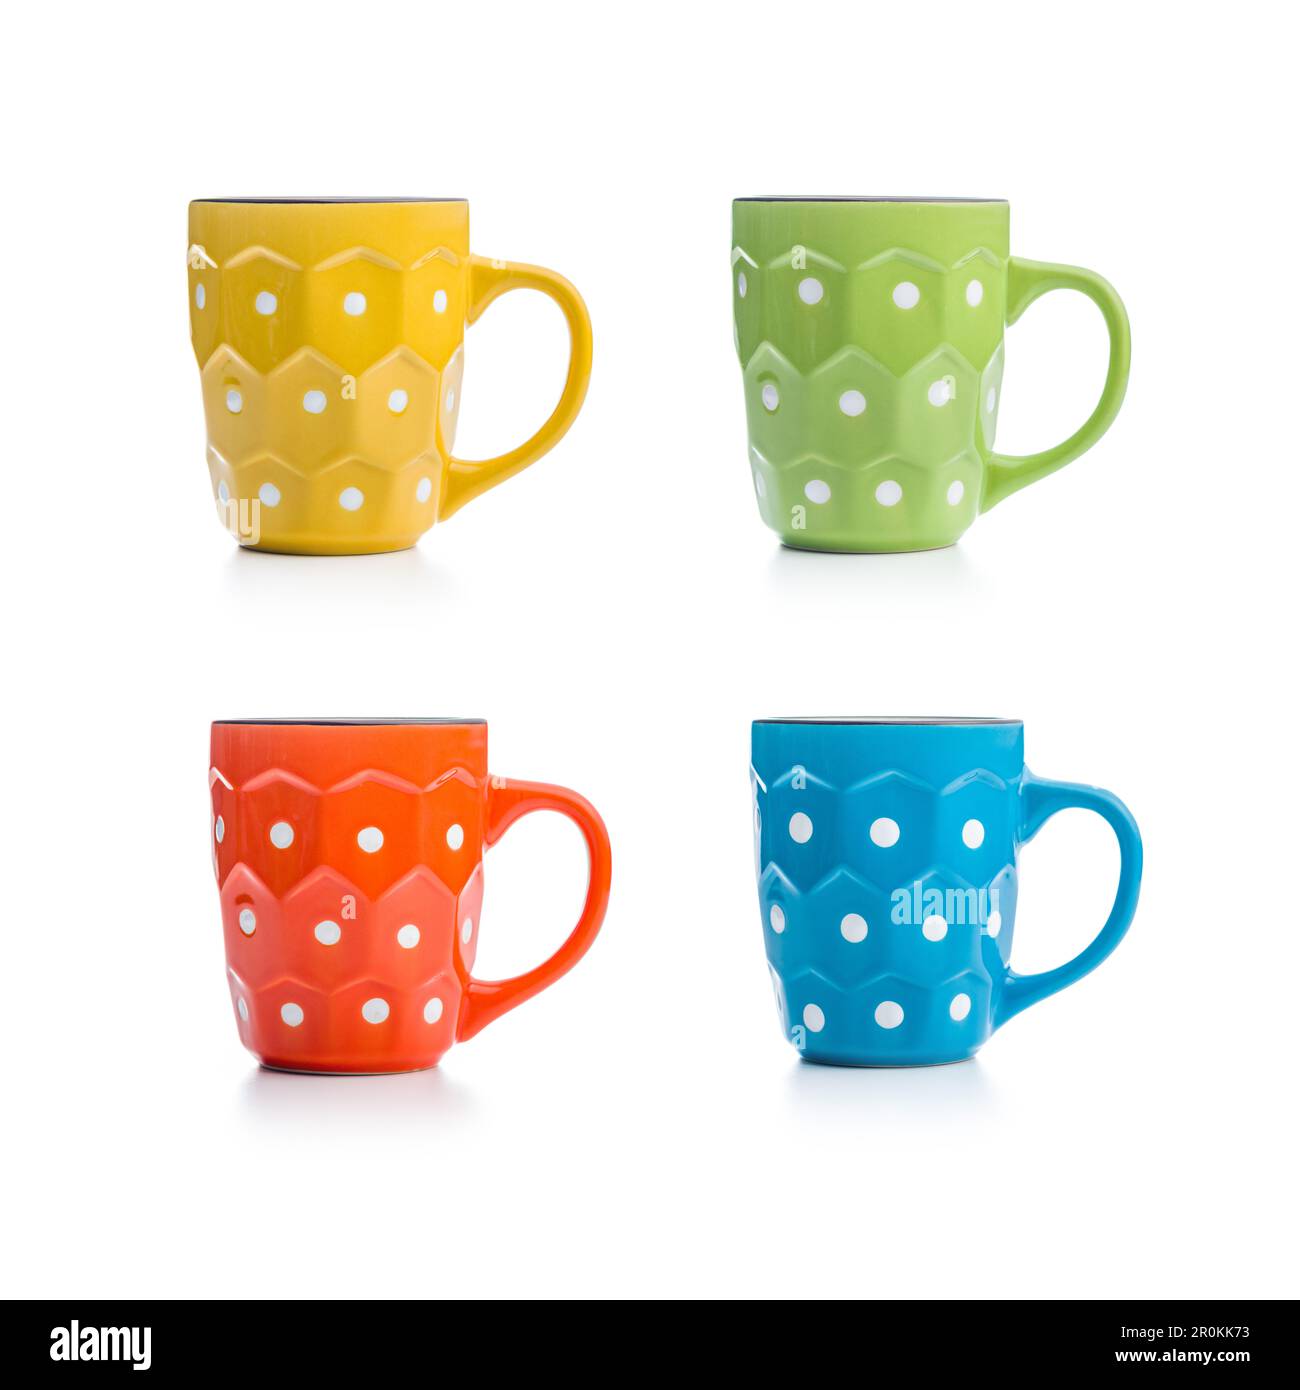 The polka dot mugs isolated on the white background. Stock Photo